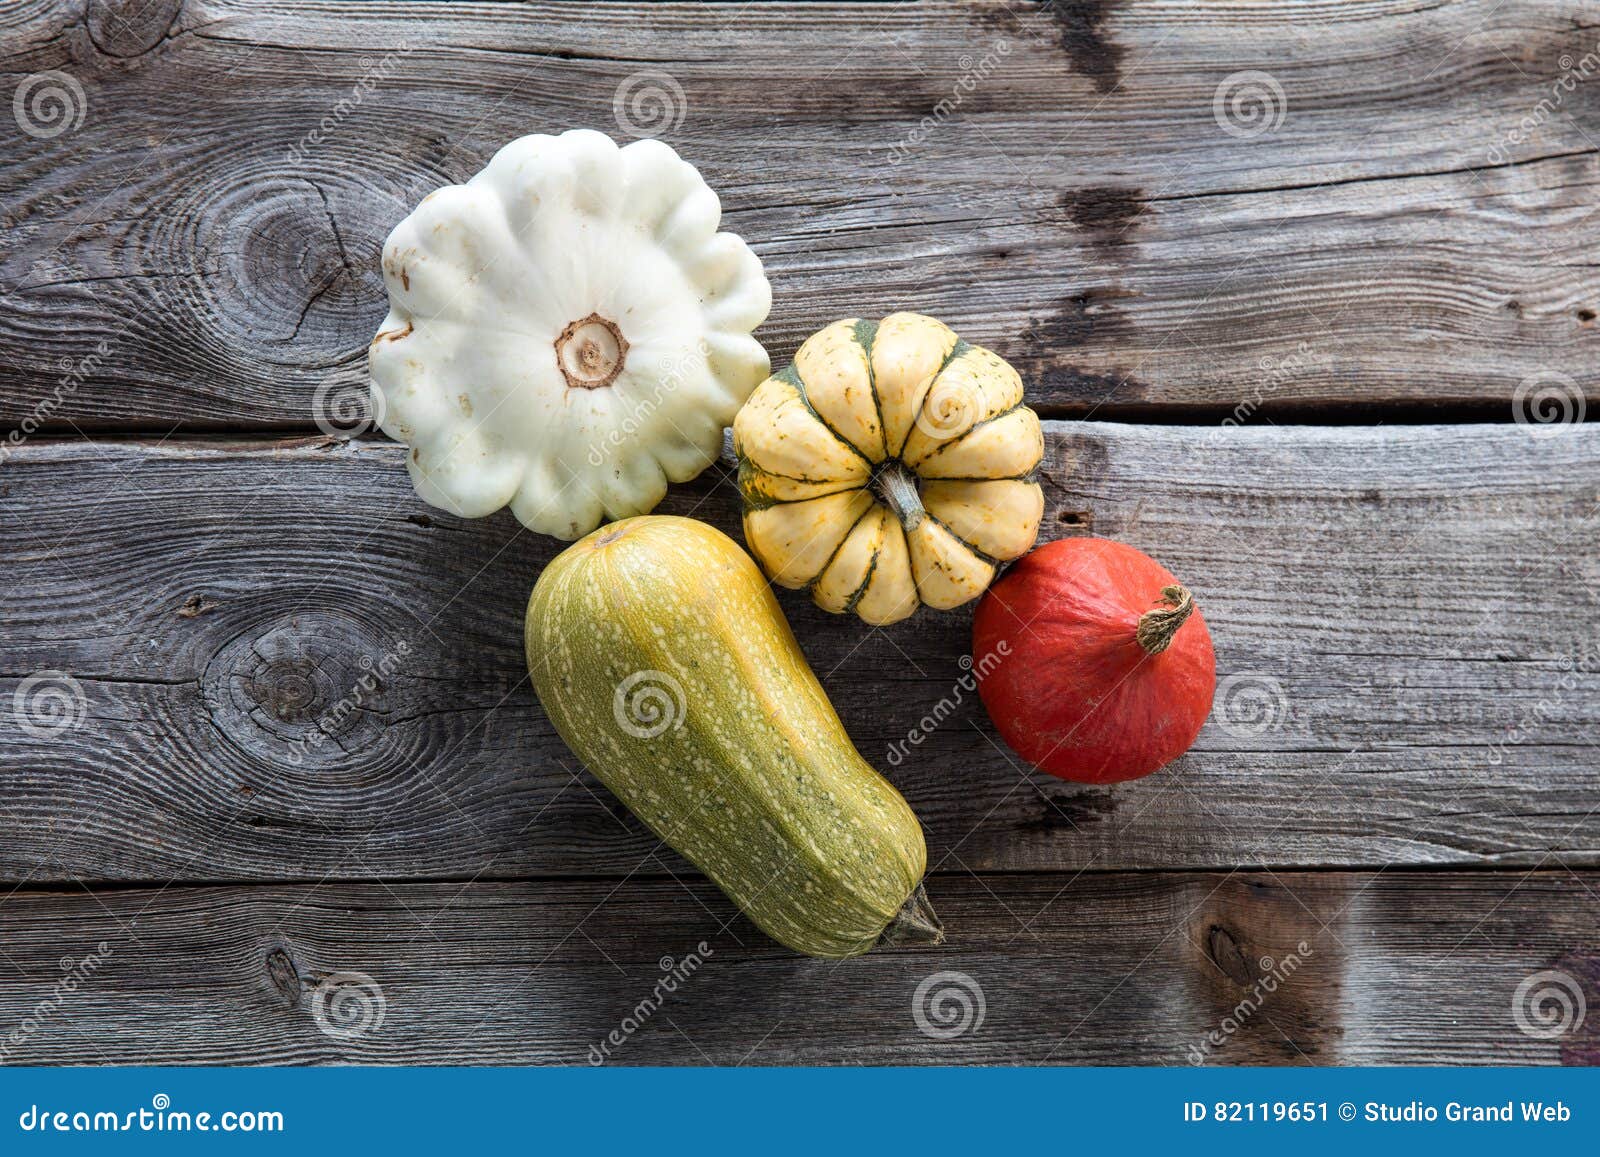 still life of organic cucurbitaceae, kuri squash and green gourd